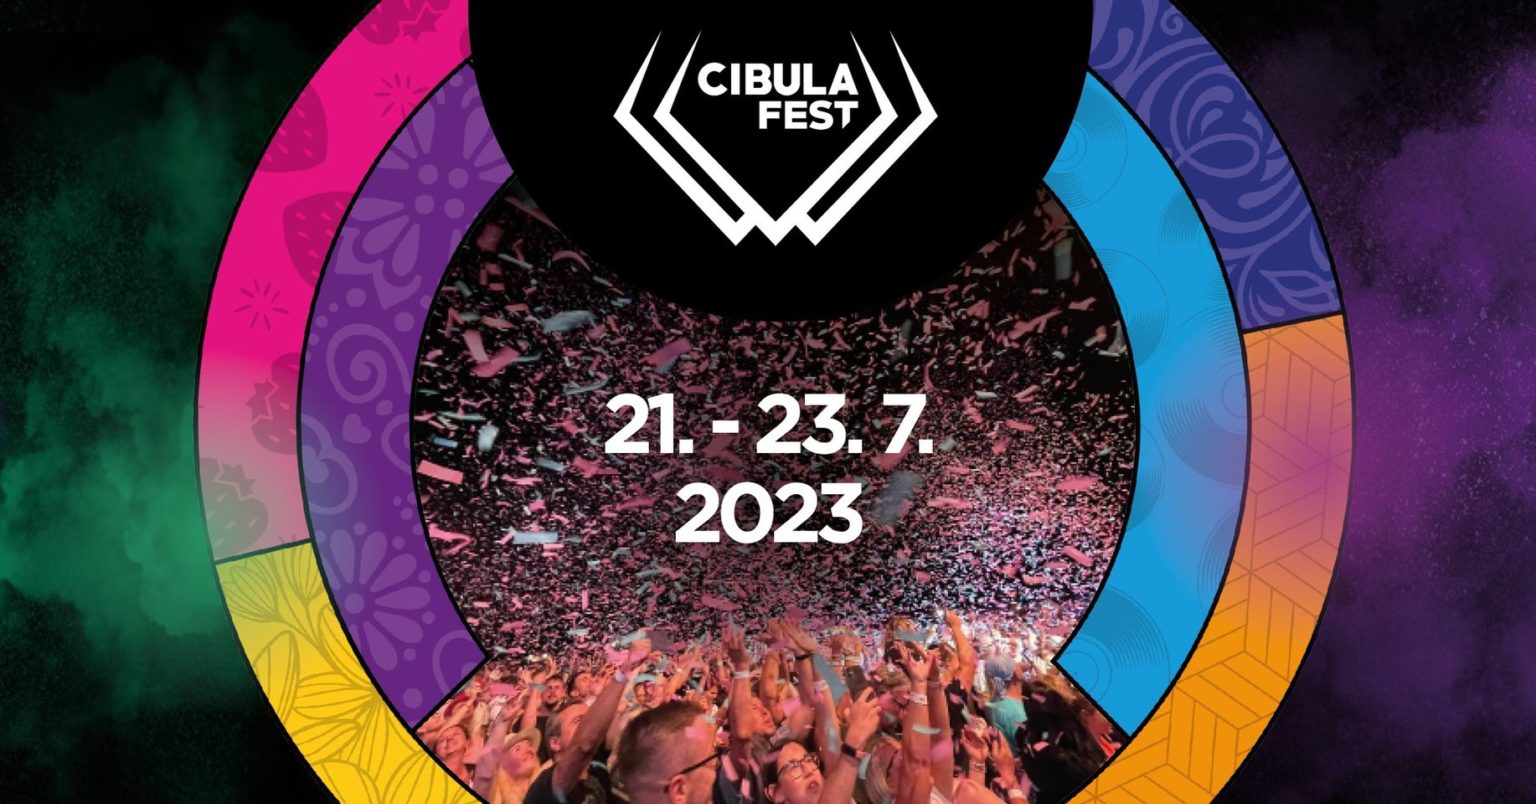 Cibula fest 2023